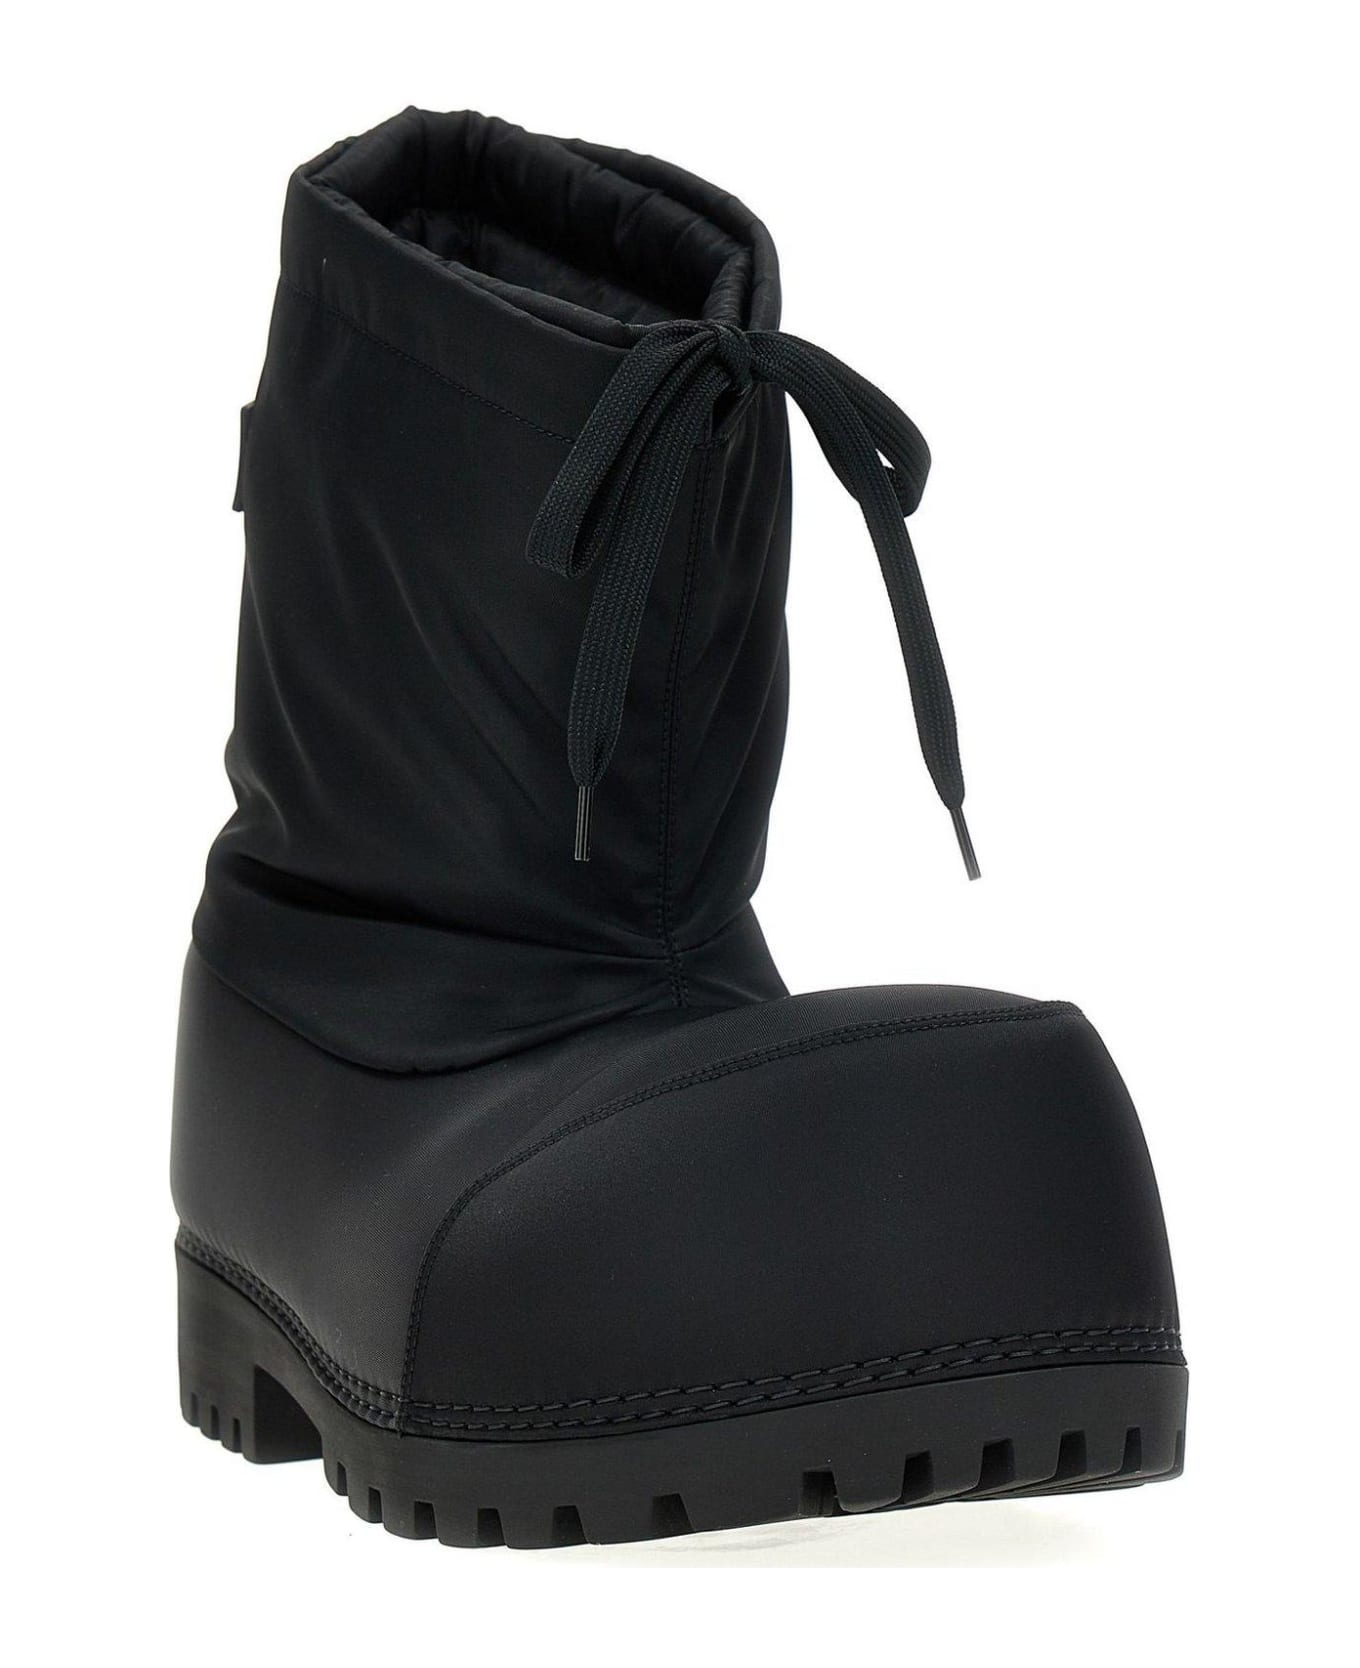 Balenciaga Black Nylon Alaska Ankle Boots - Black